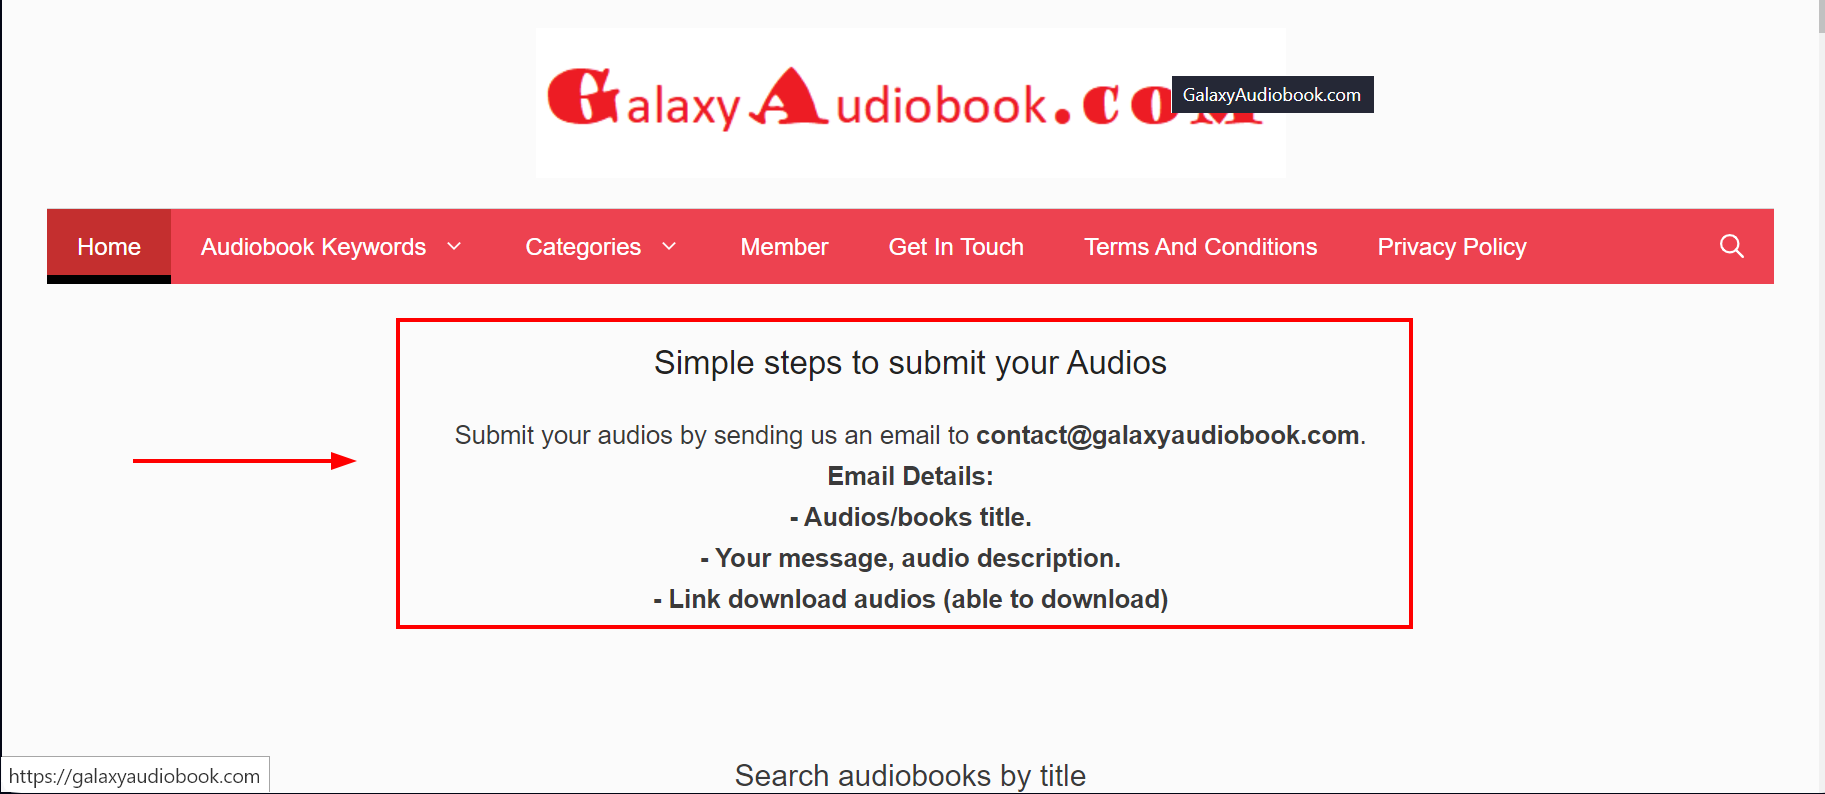 Upload your audiobooks